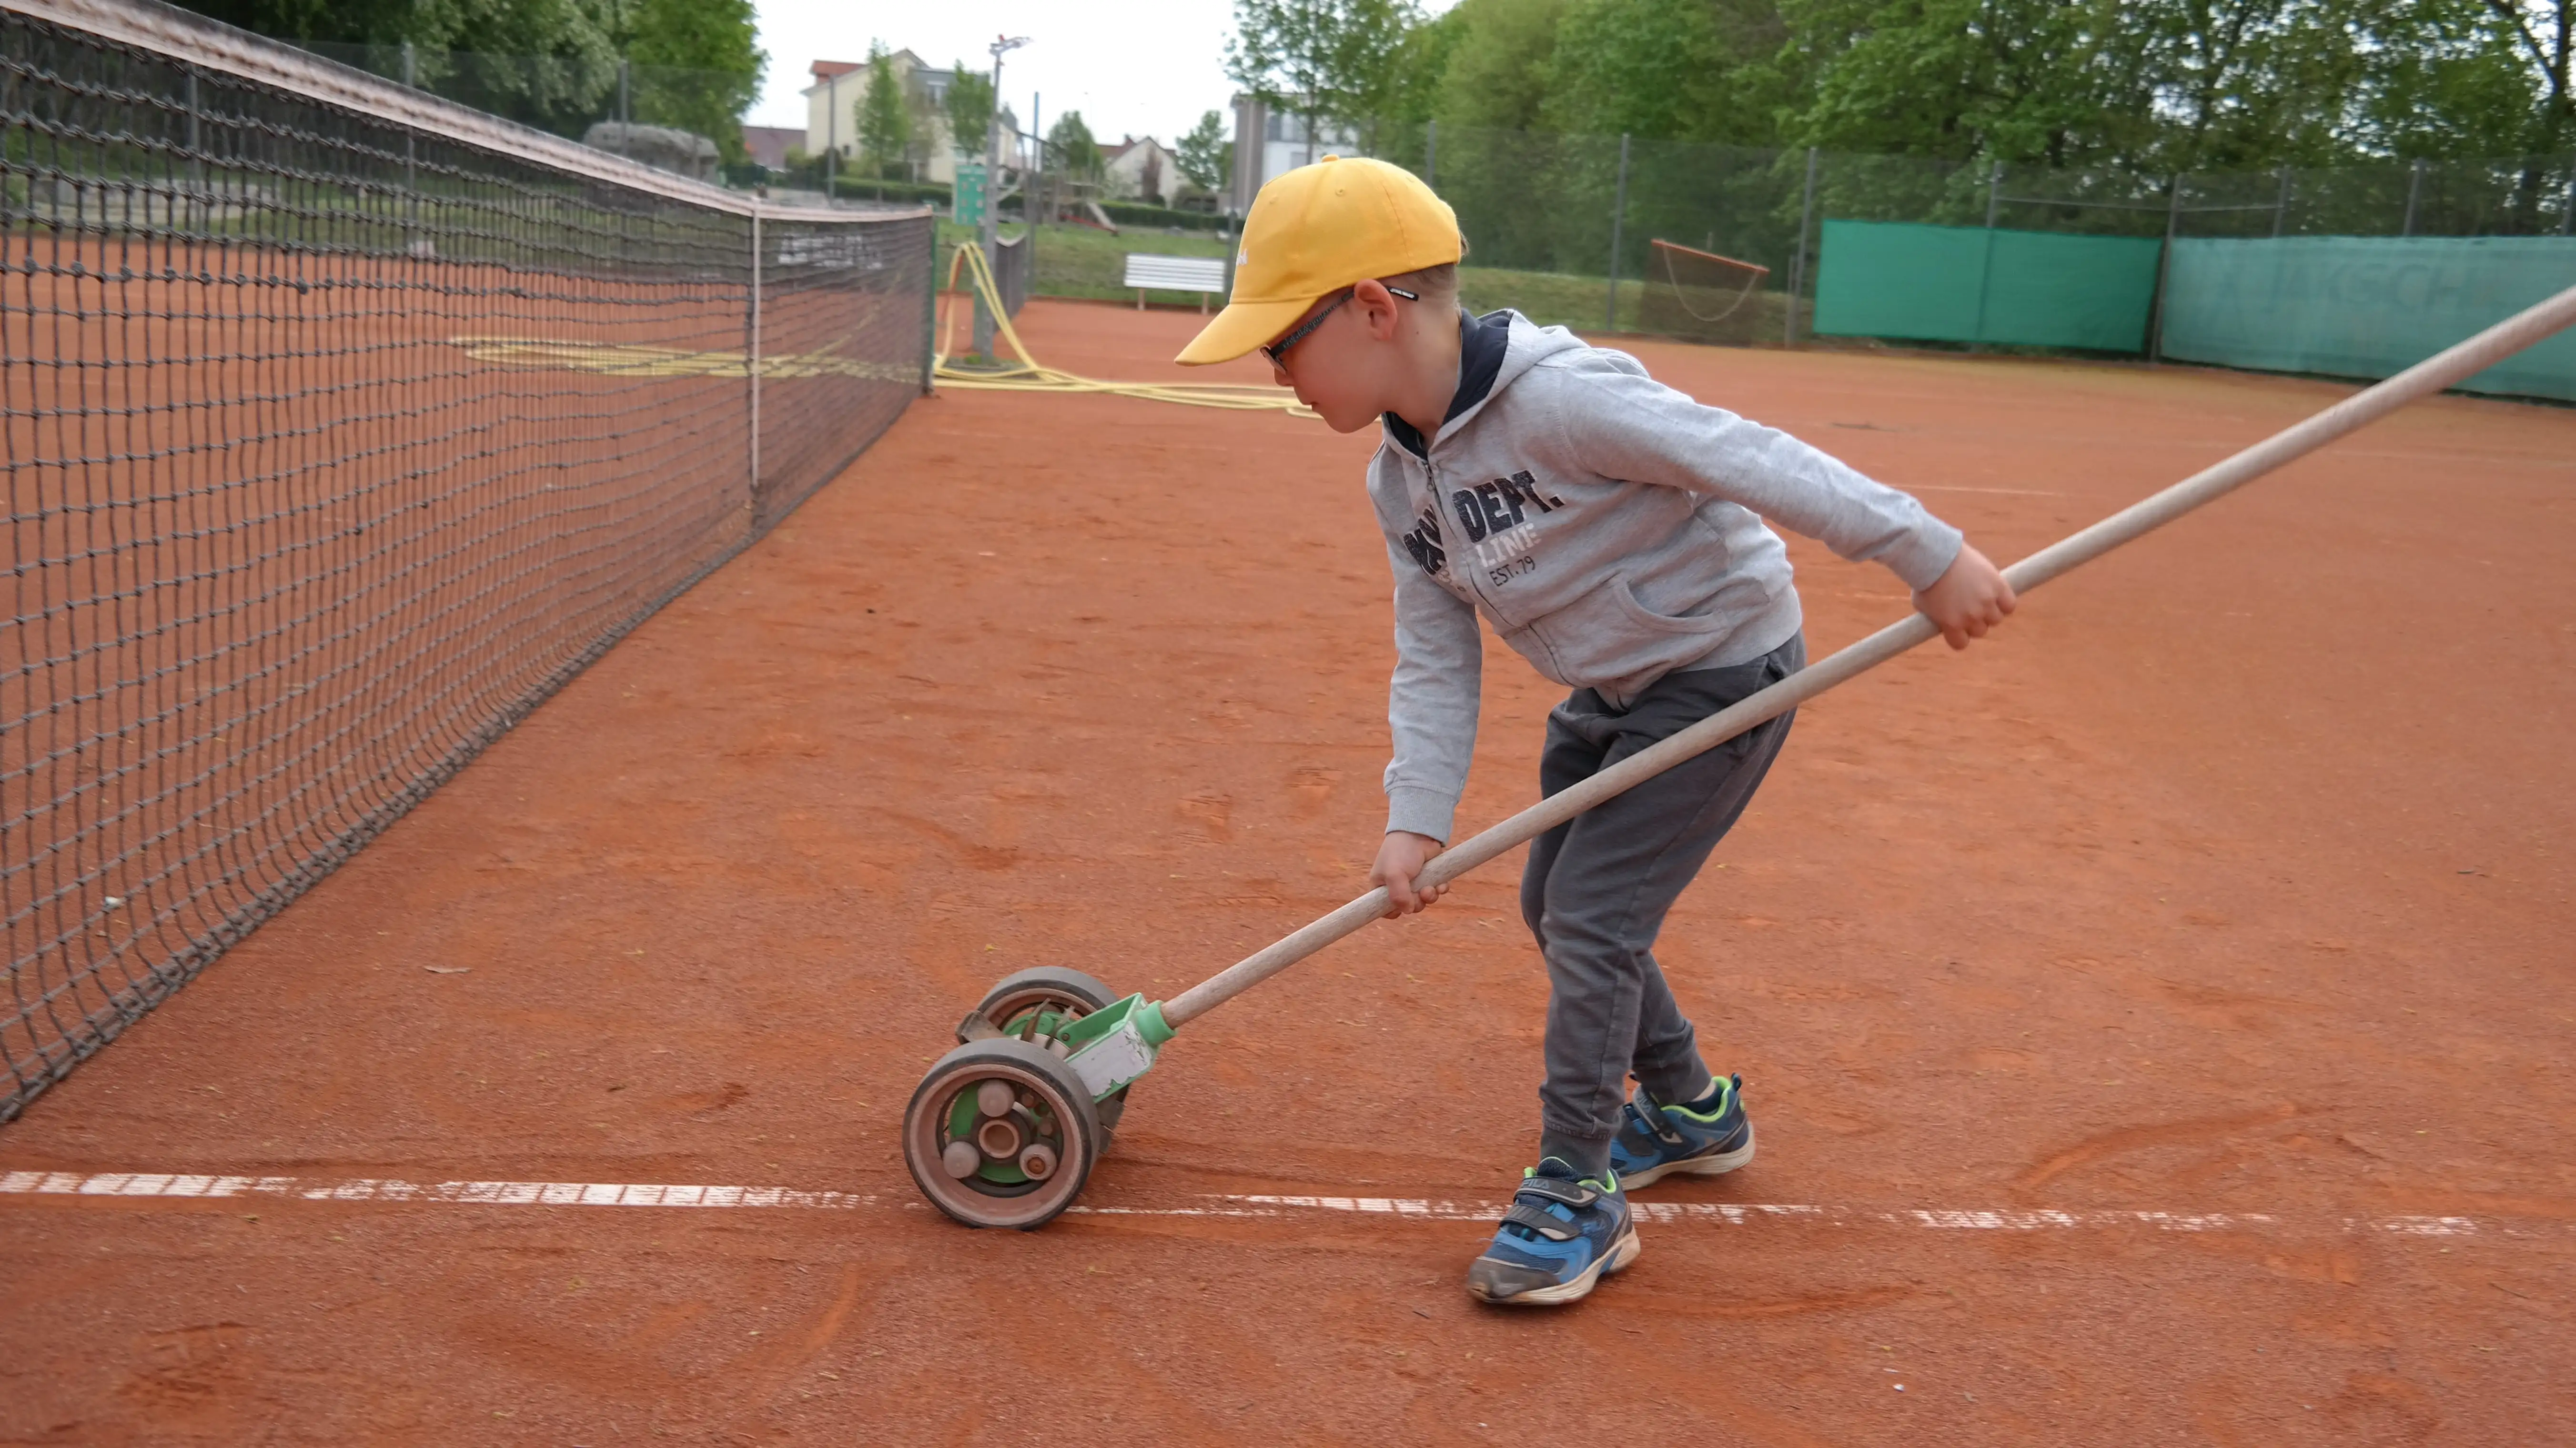 Kind pflegt Tennisplatz nach Training